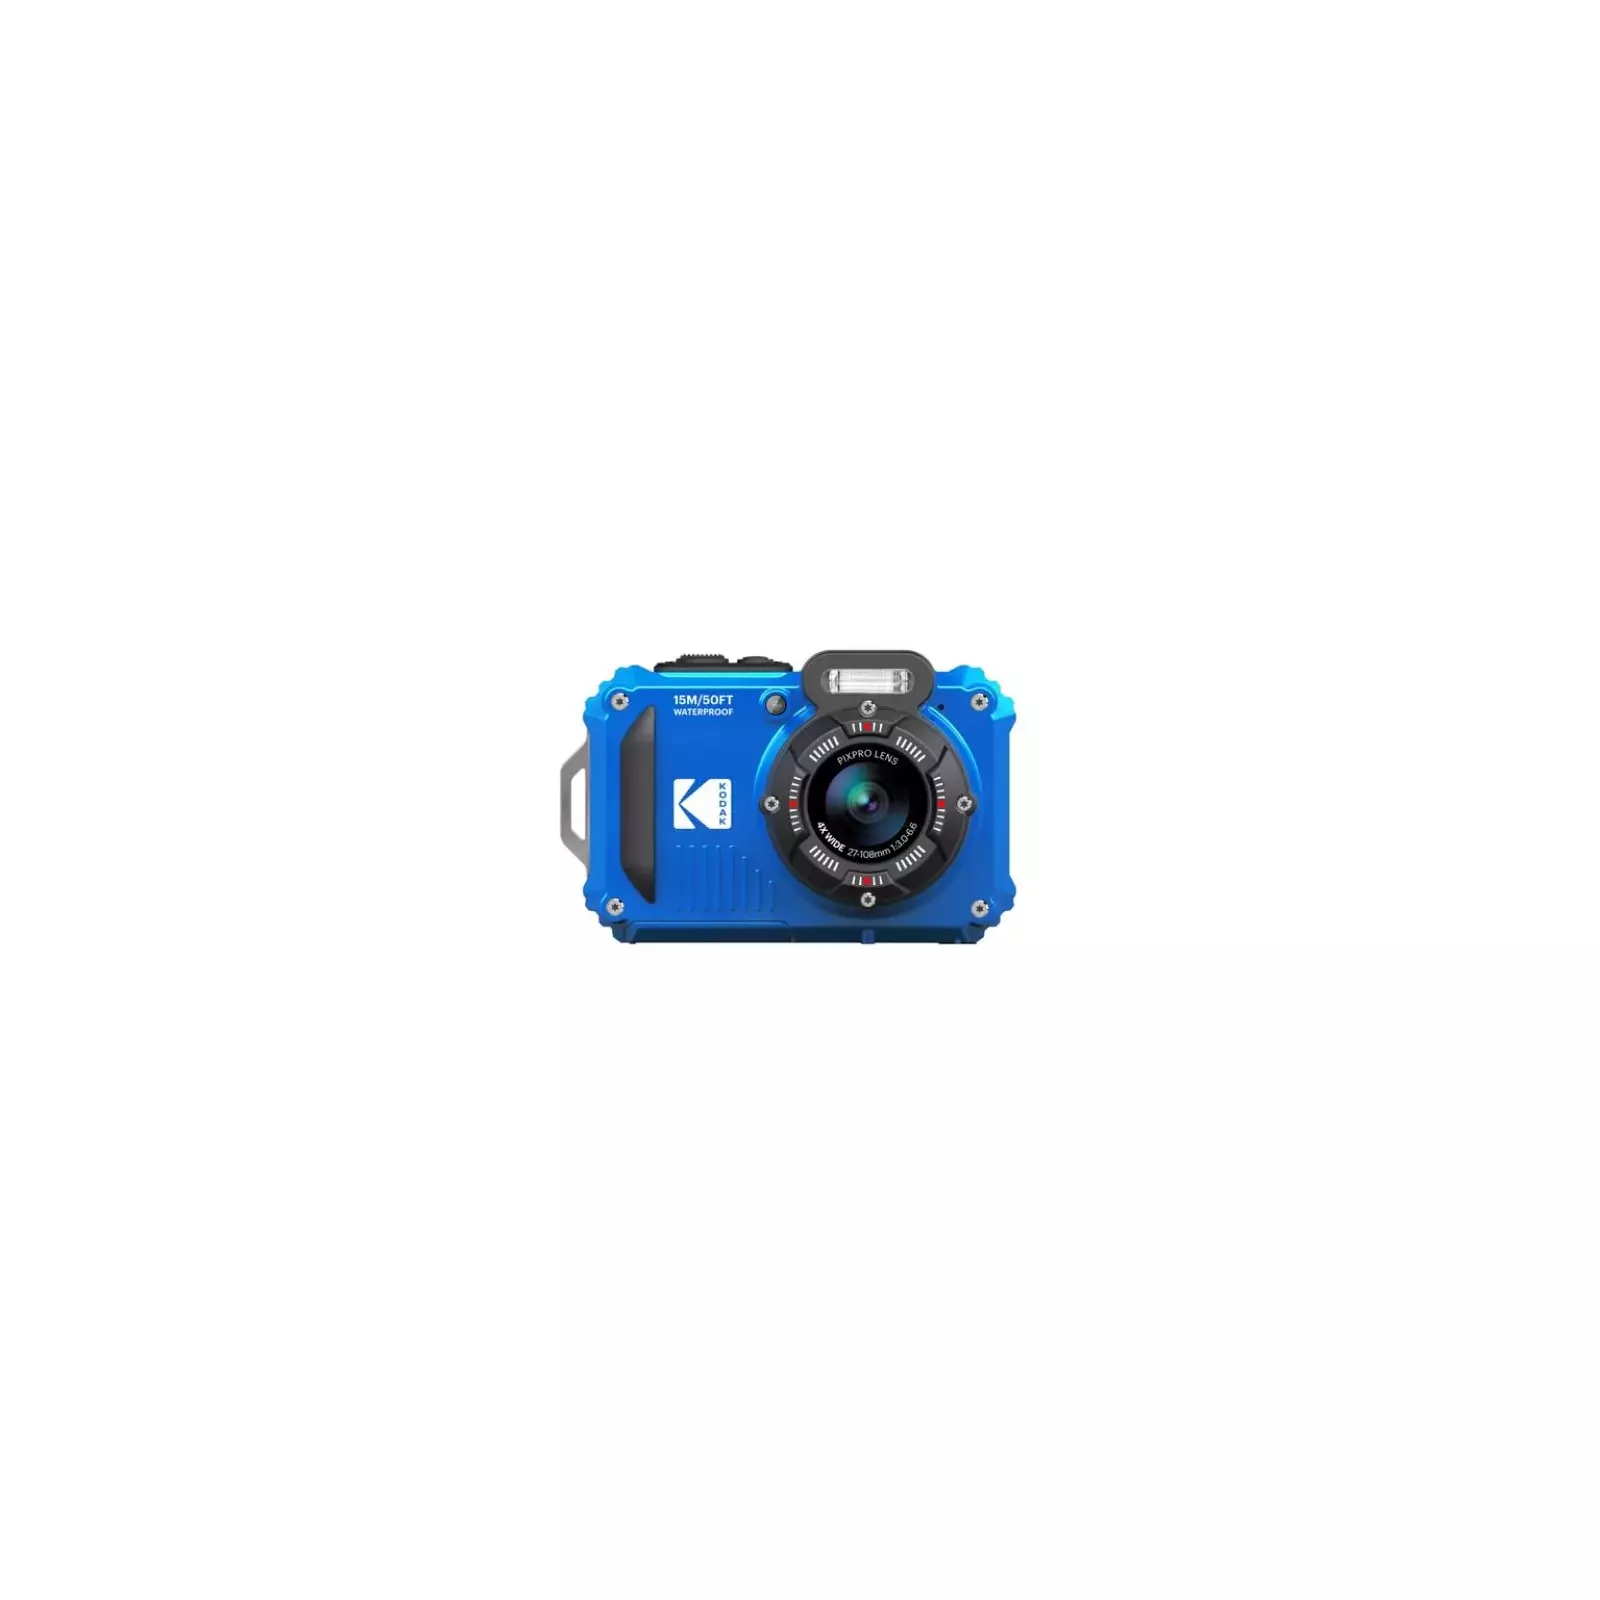 Kodak PIXPRO WPZ2 Waterproof Rugged Digital Camera, Blue WPZ2-BL